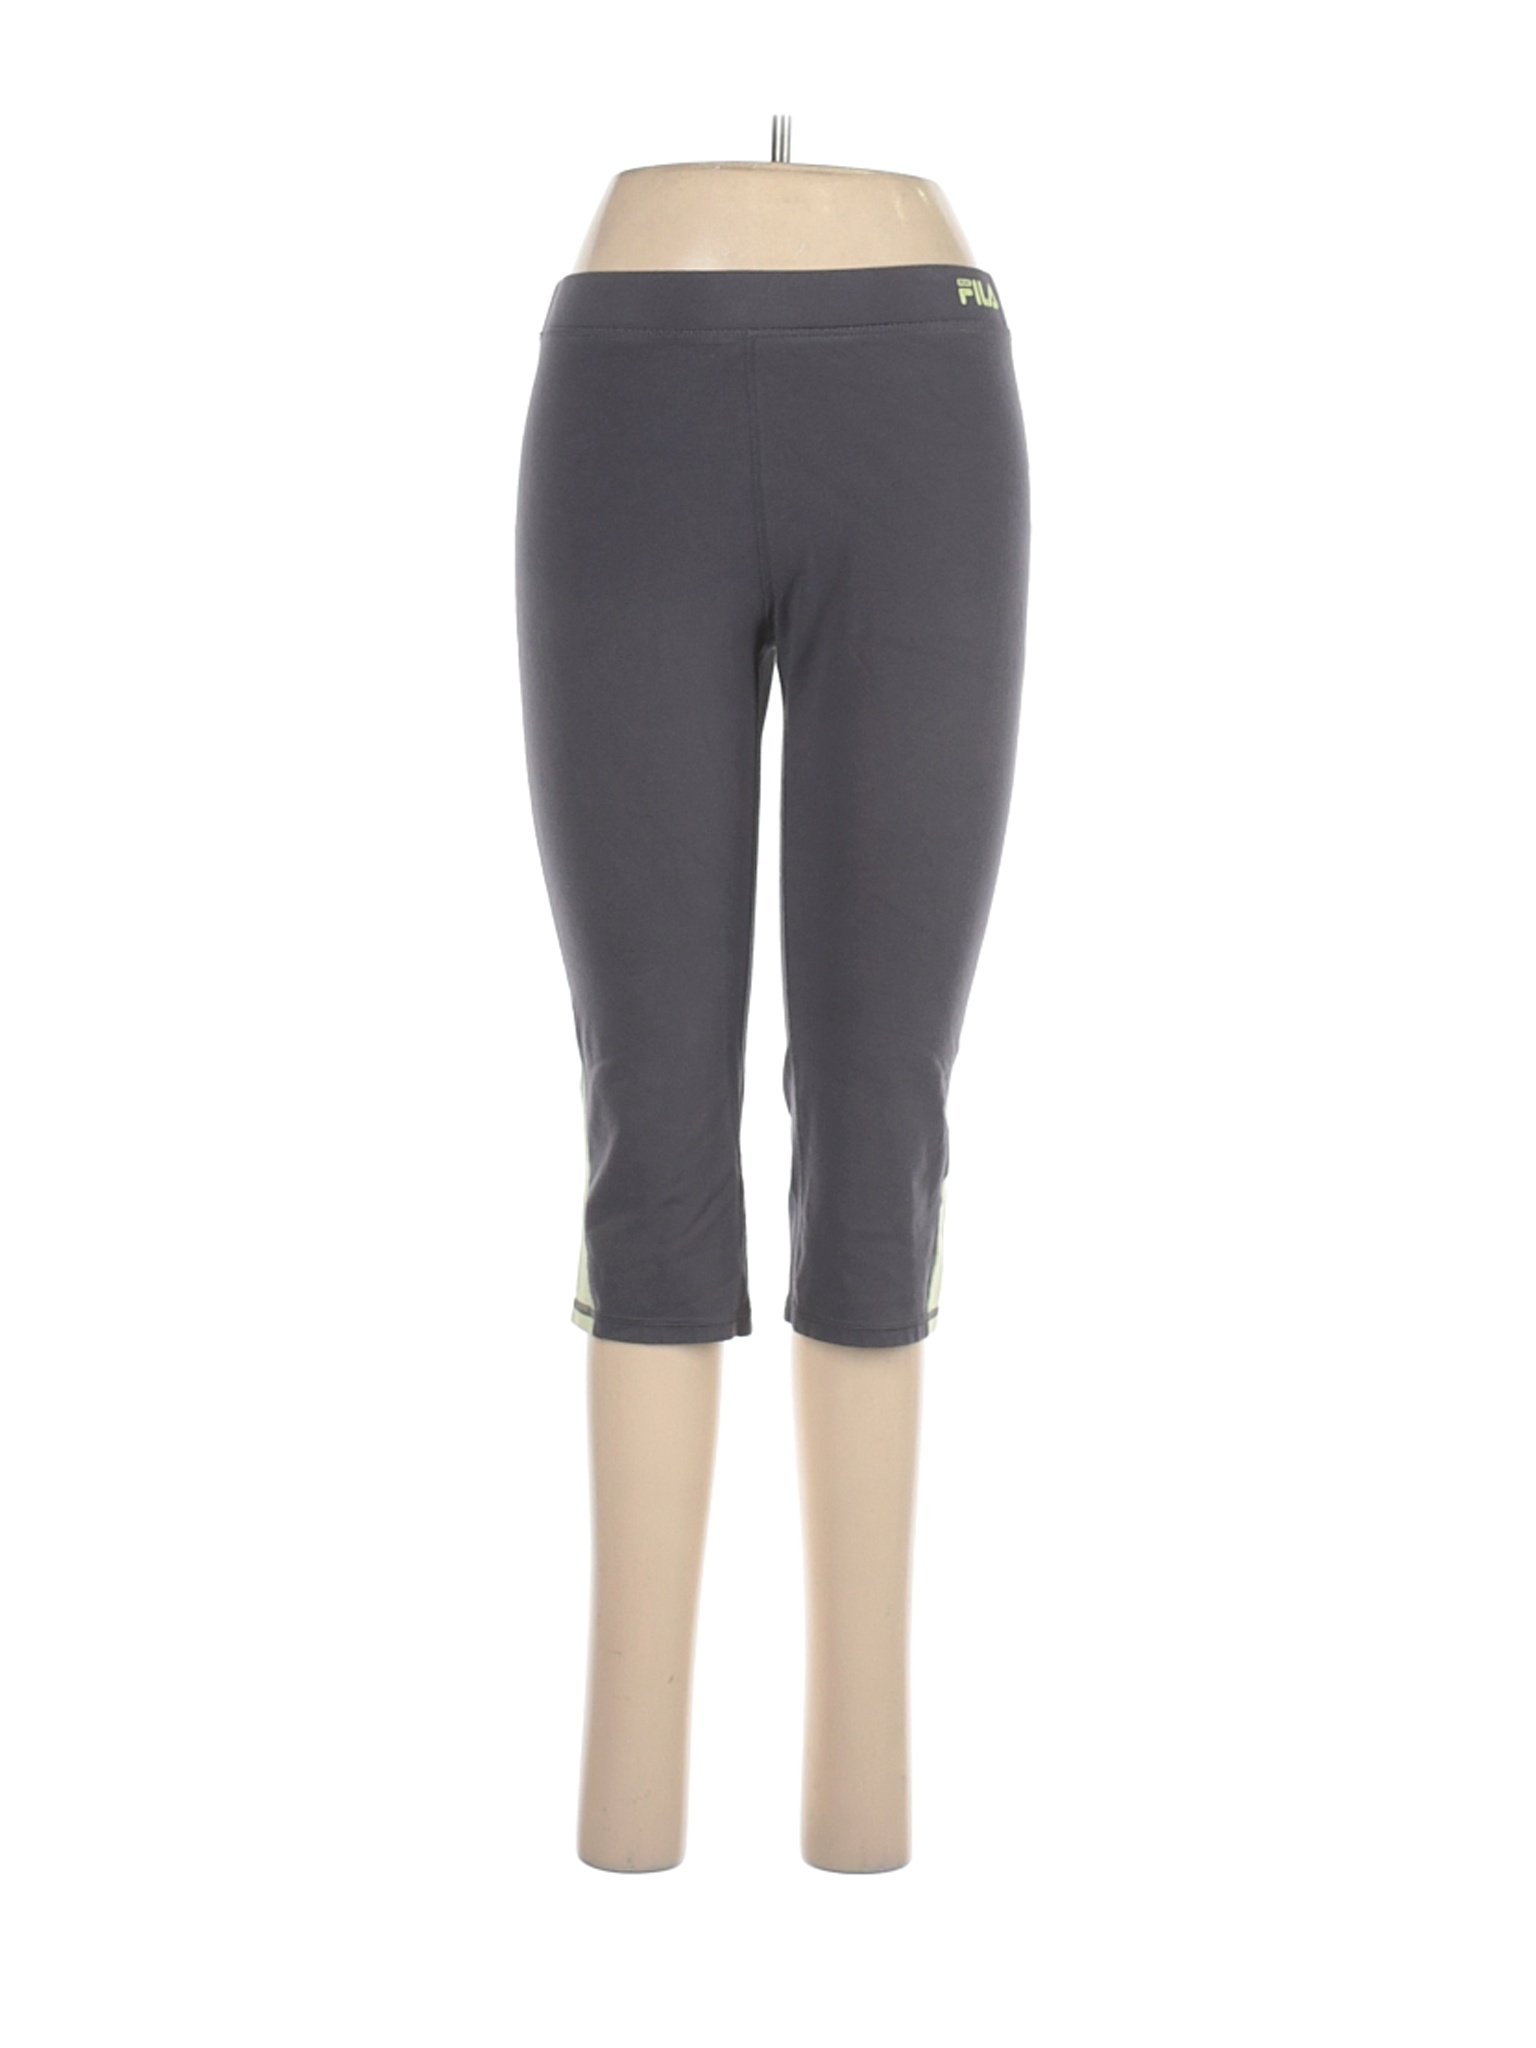 Fila Women Gray Active Pants M | eBay